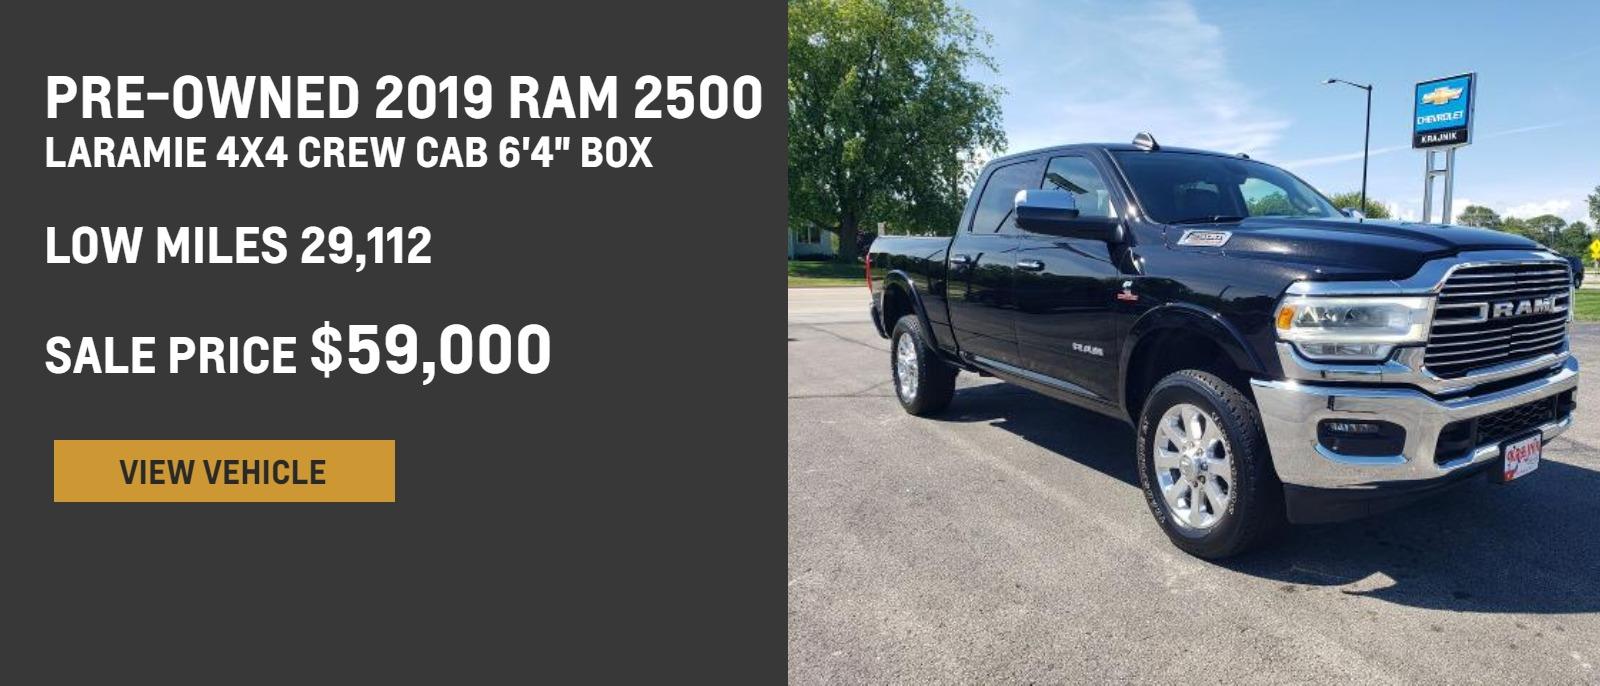 PRE-OWNED 2019 RAM 2500
Laramie 4x4 Crew Cab 6'4" Box
Low Miles 29,112

SALE PRICE $59,000